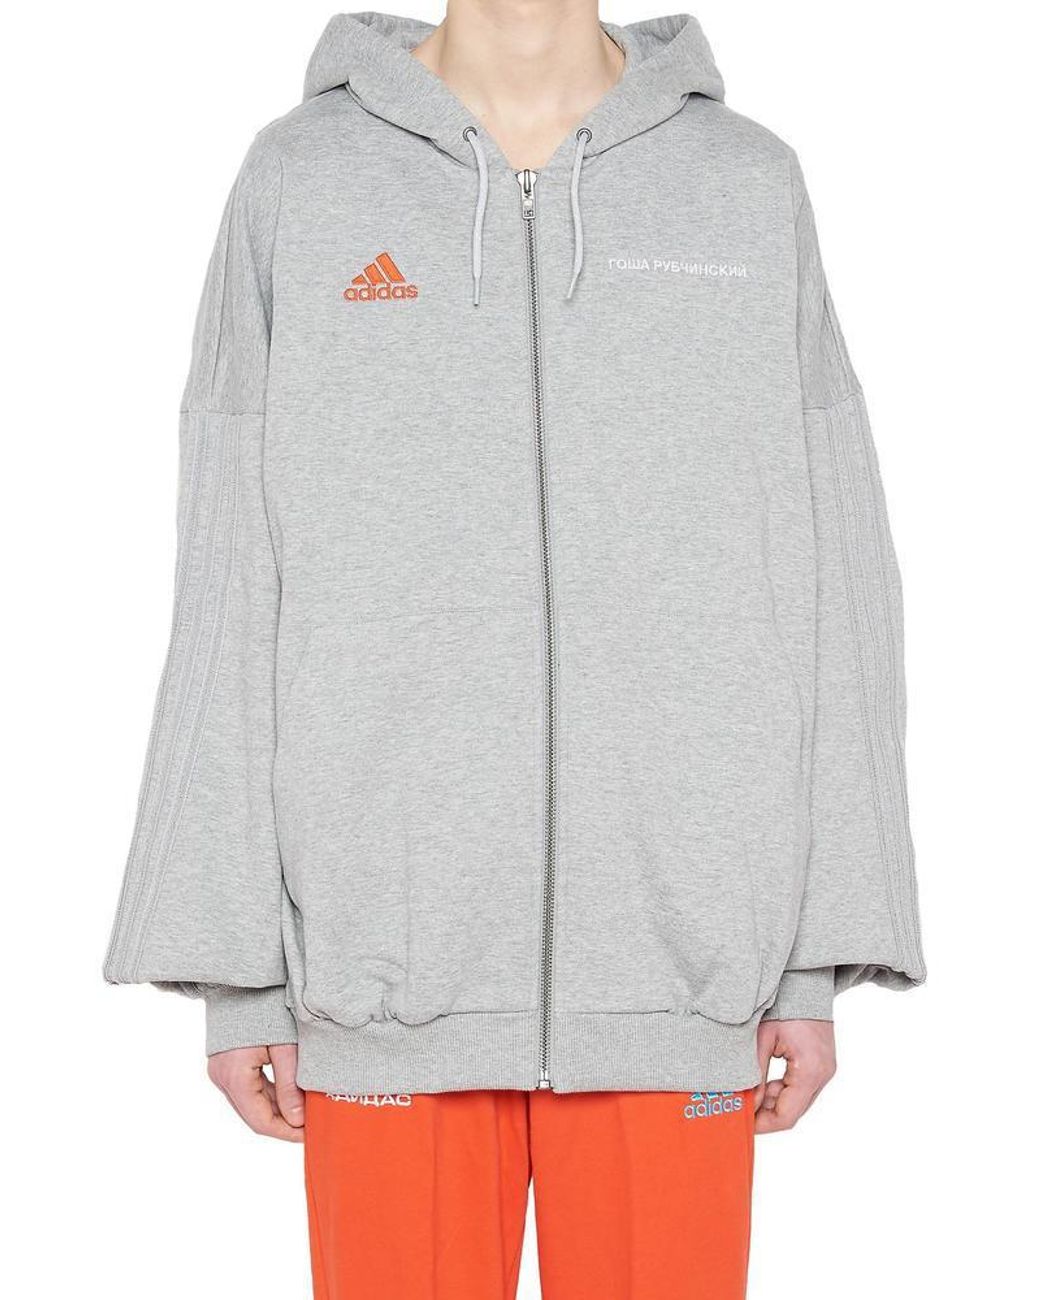 Gosha Rubchinskiy X Adidas Logo Zip Up Hoodie in Gray for Men | Lyst